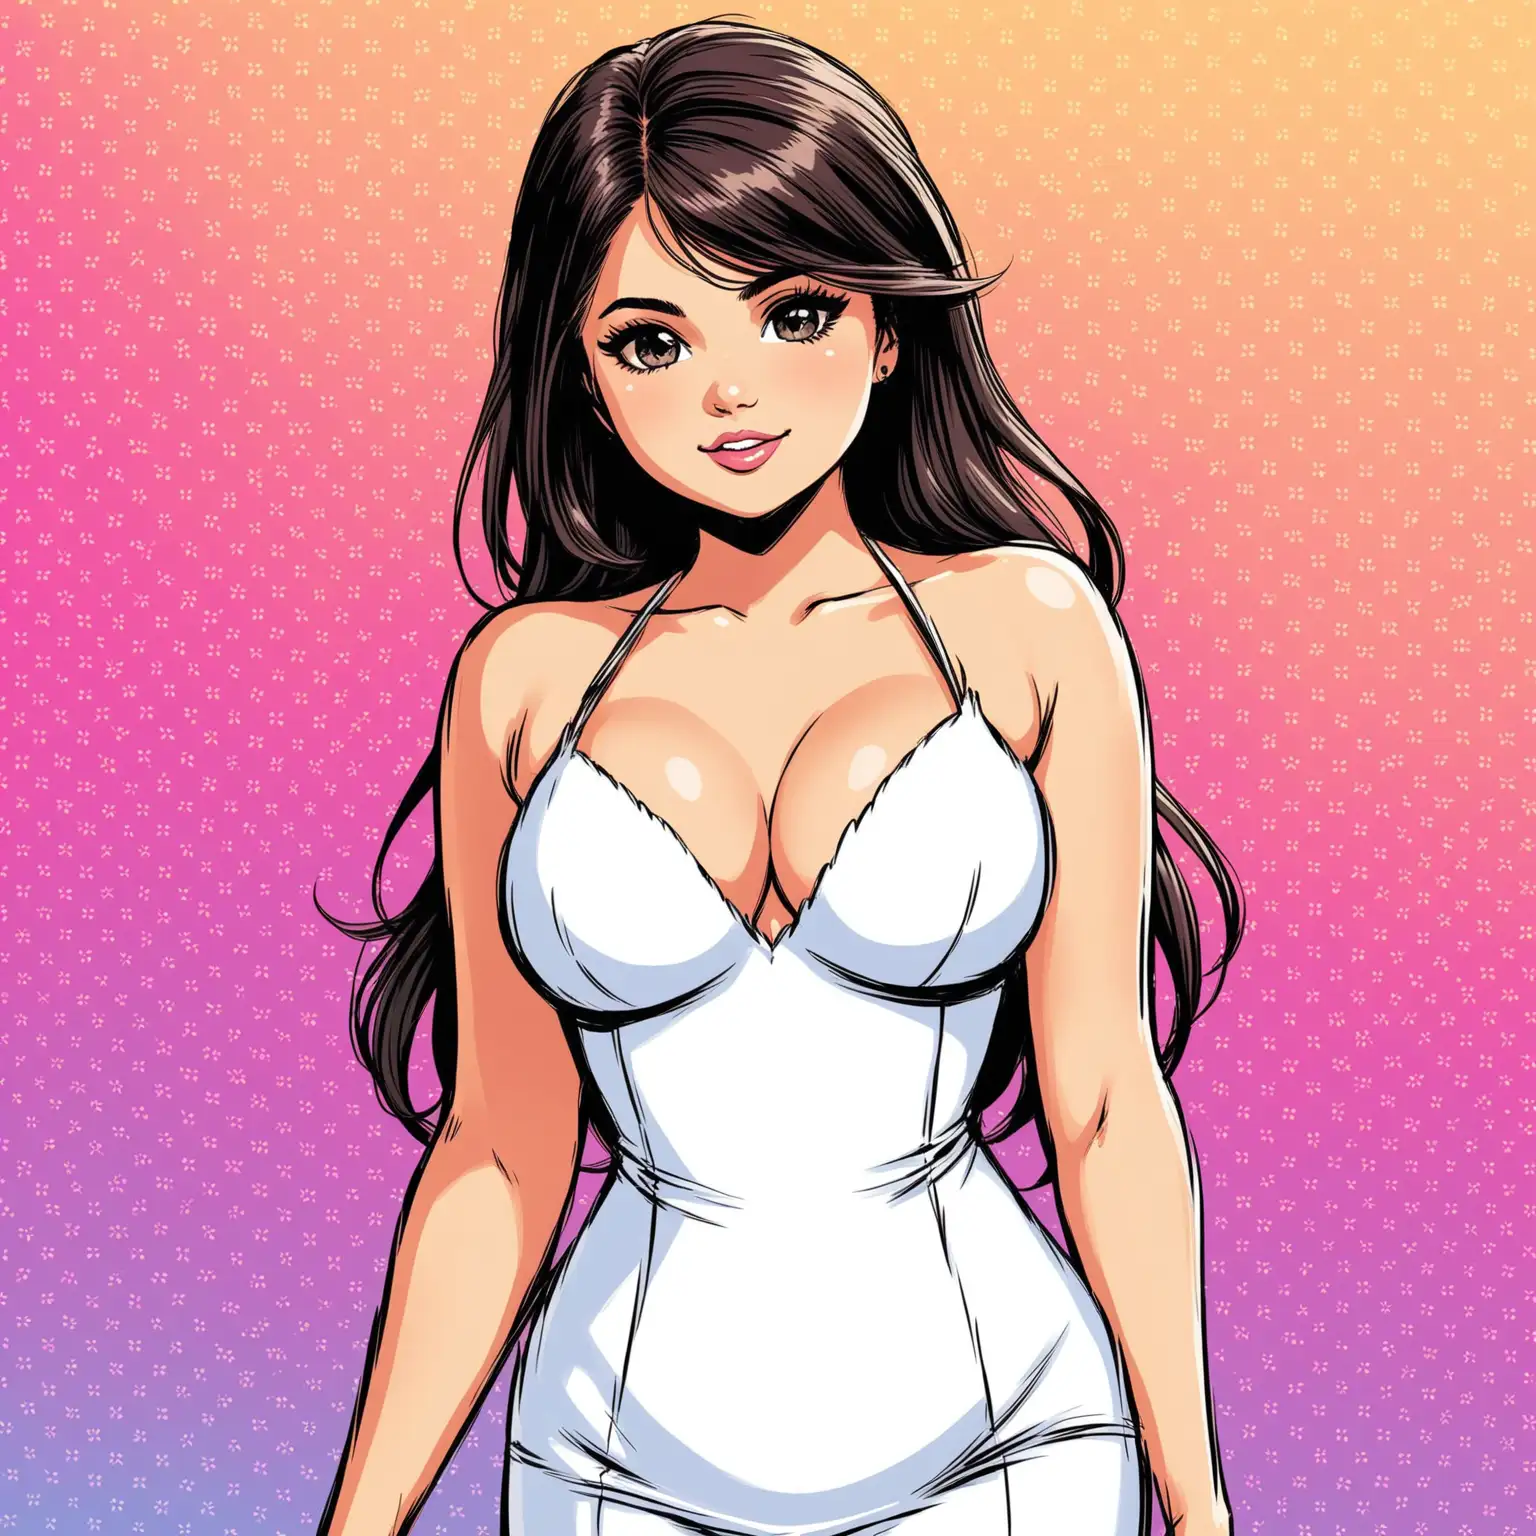 Elegant Selena Gomez Inspired Woman in Comic Book Style